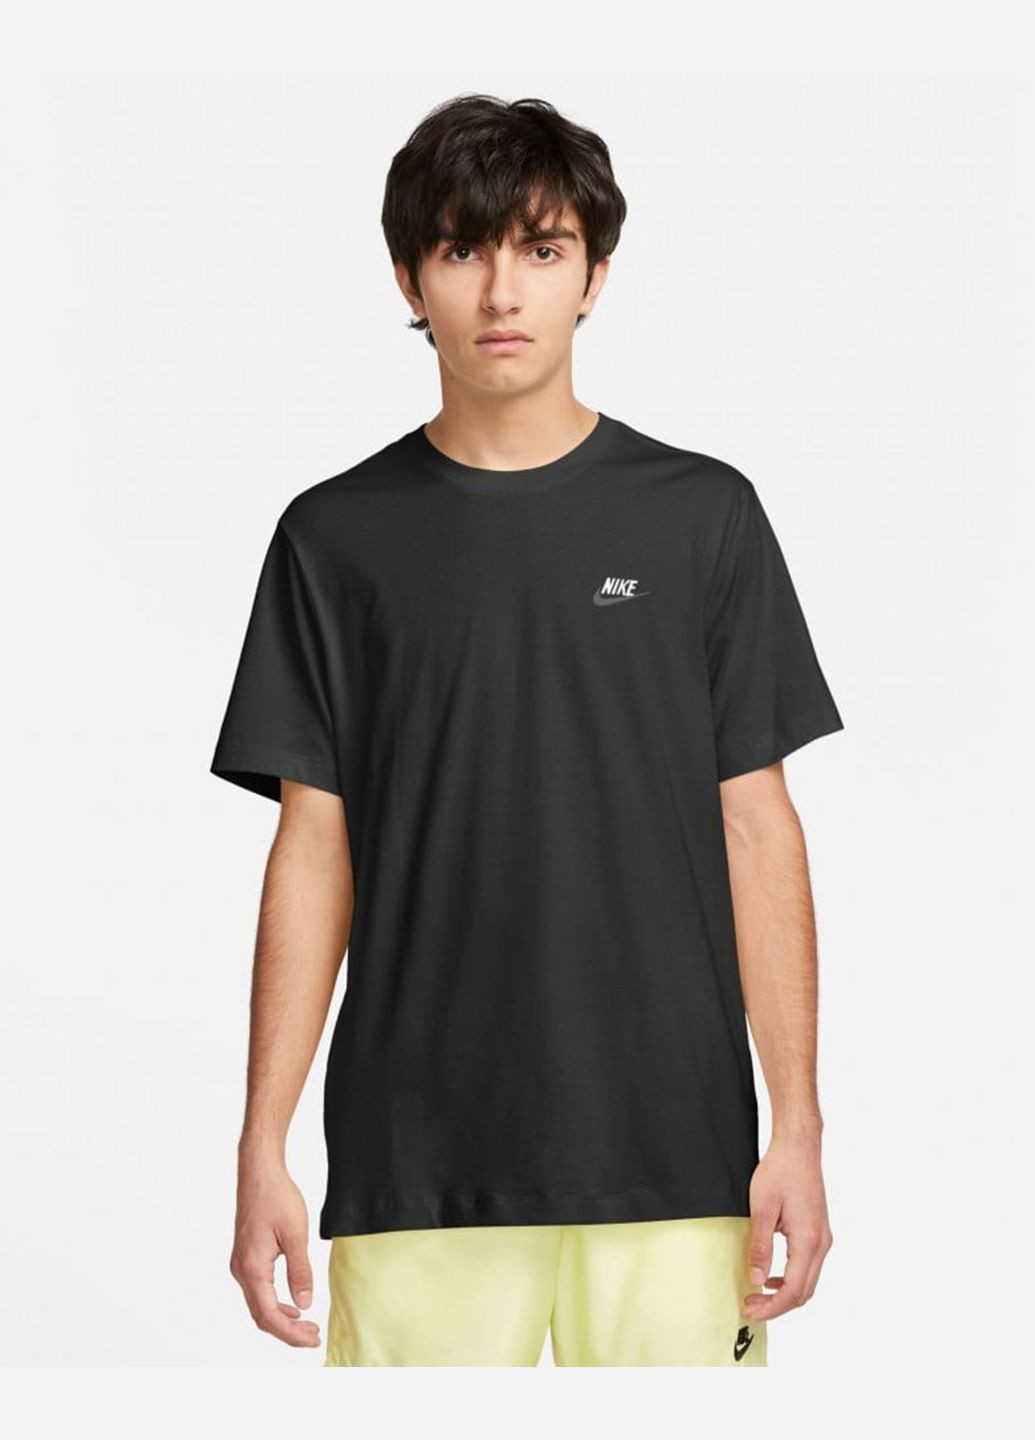 Черная мужская футболка portswear club ar4997-014 черная Nike